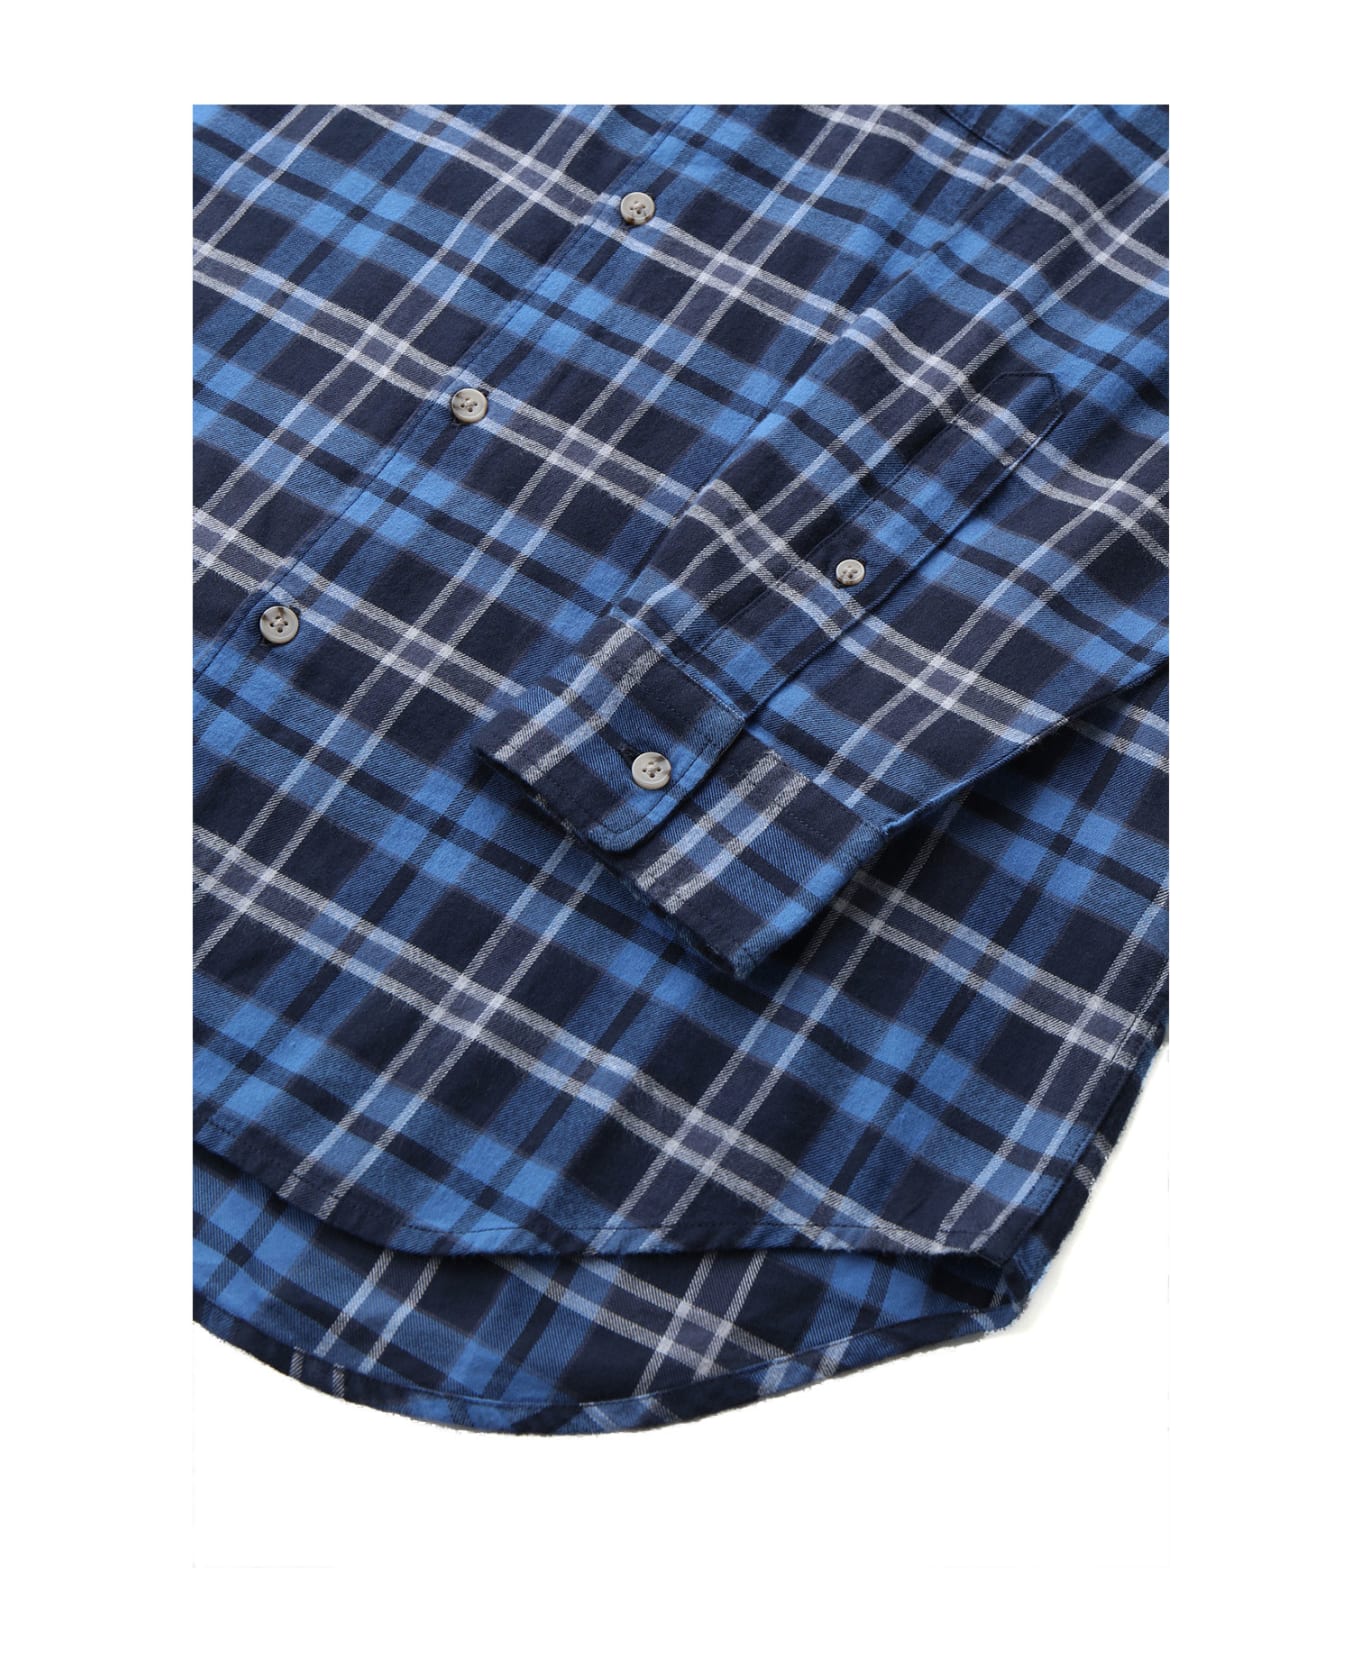 Woolrich Tweed Shirt - BLUE CHECK